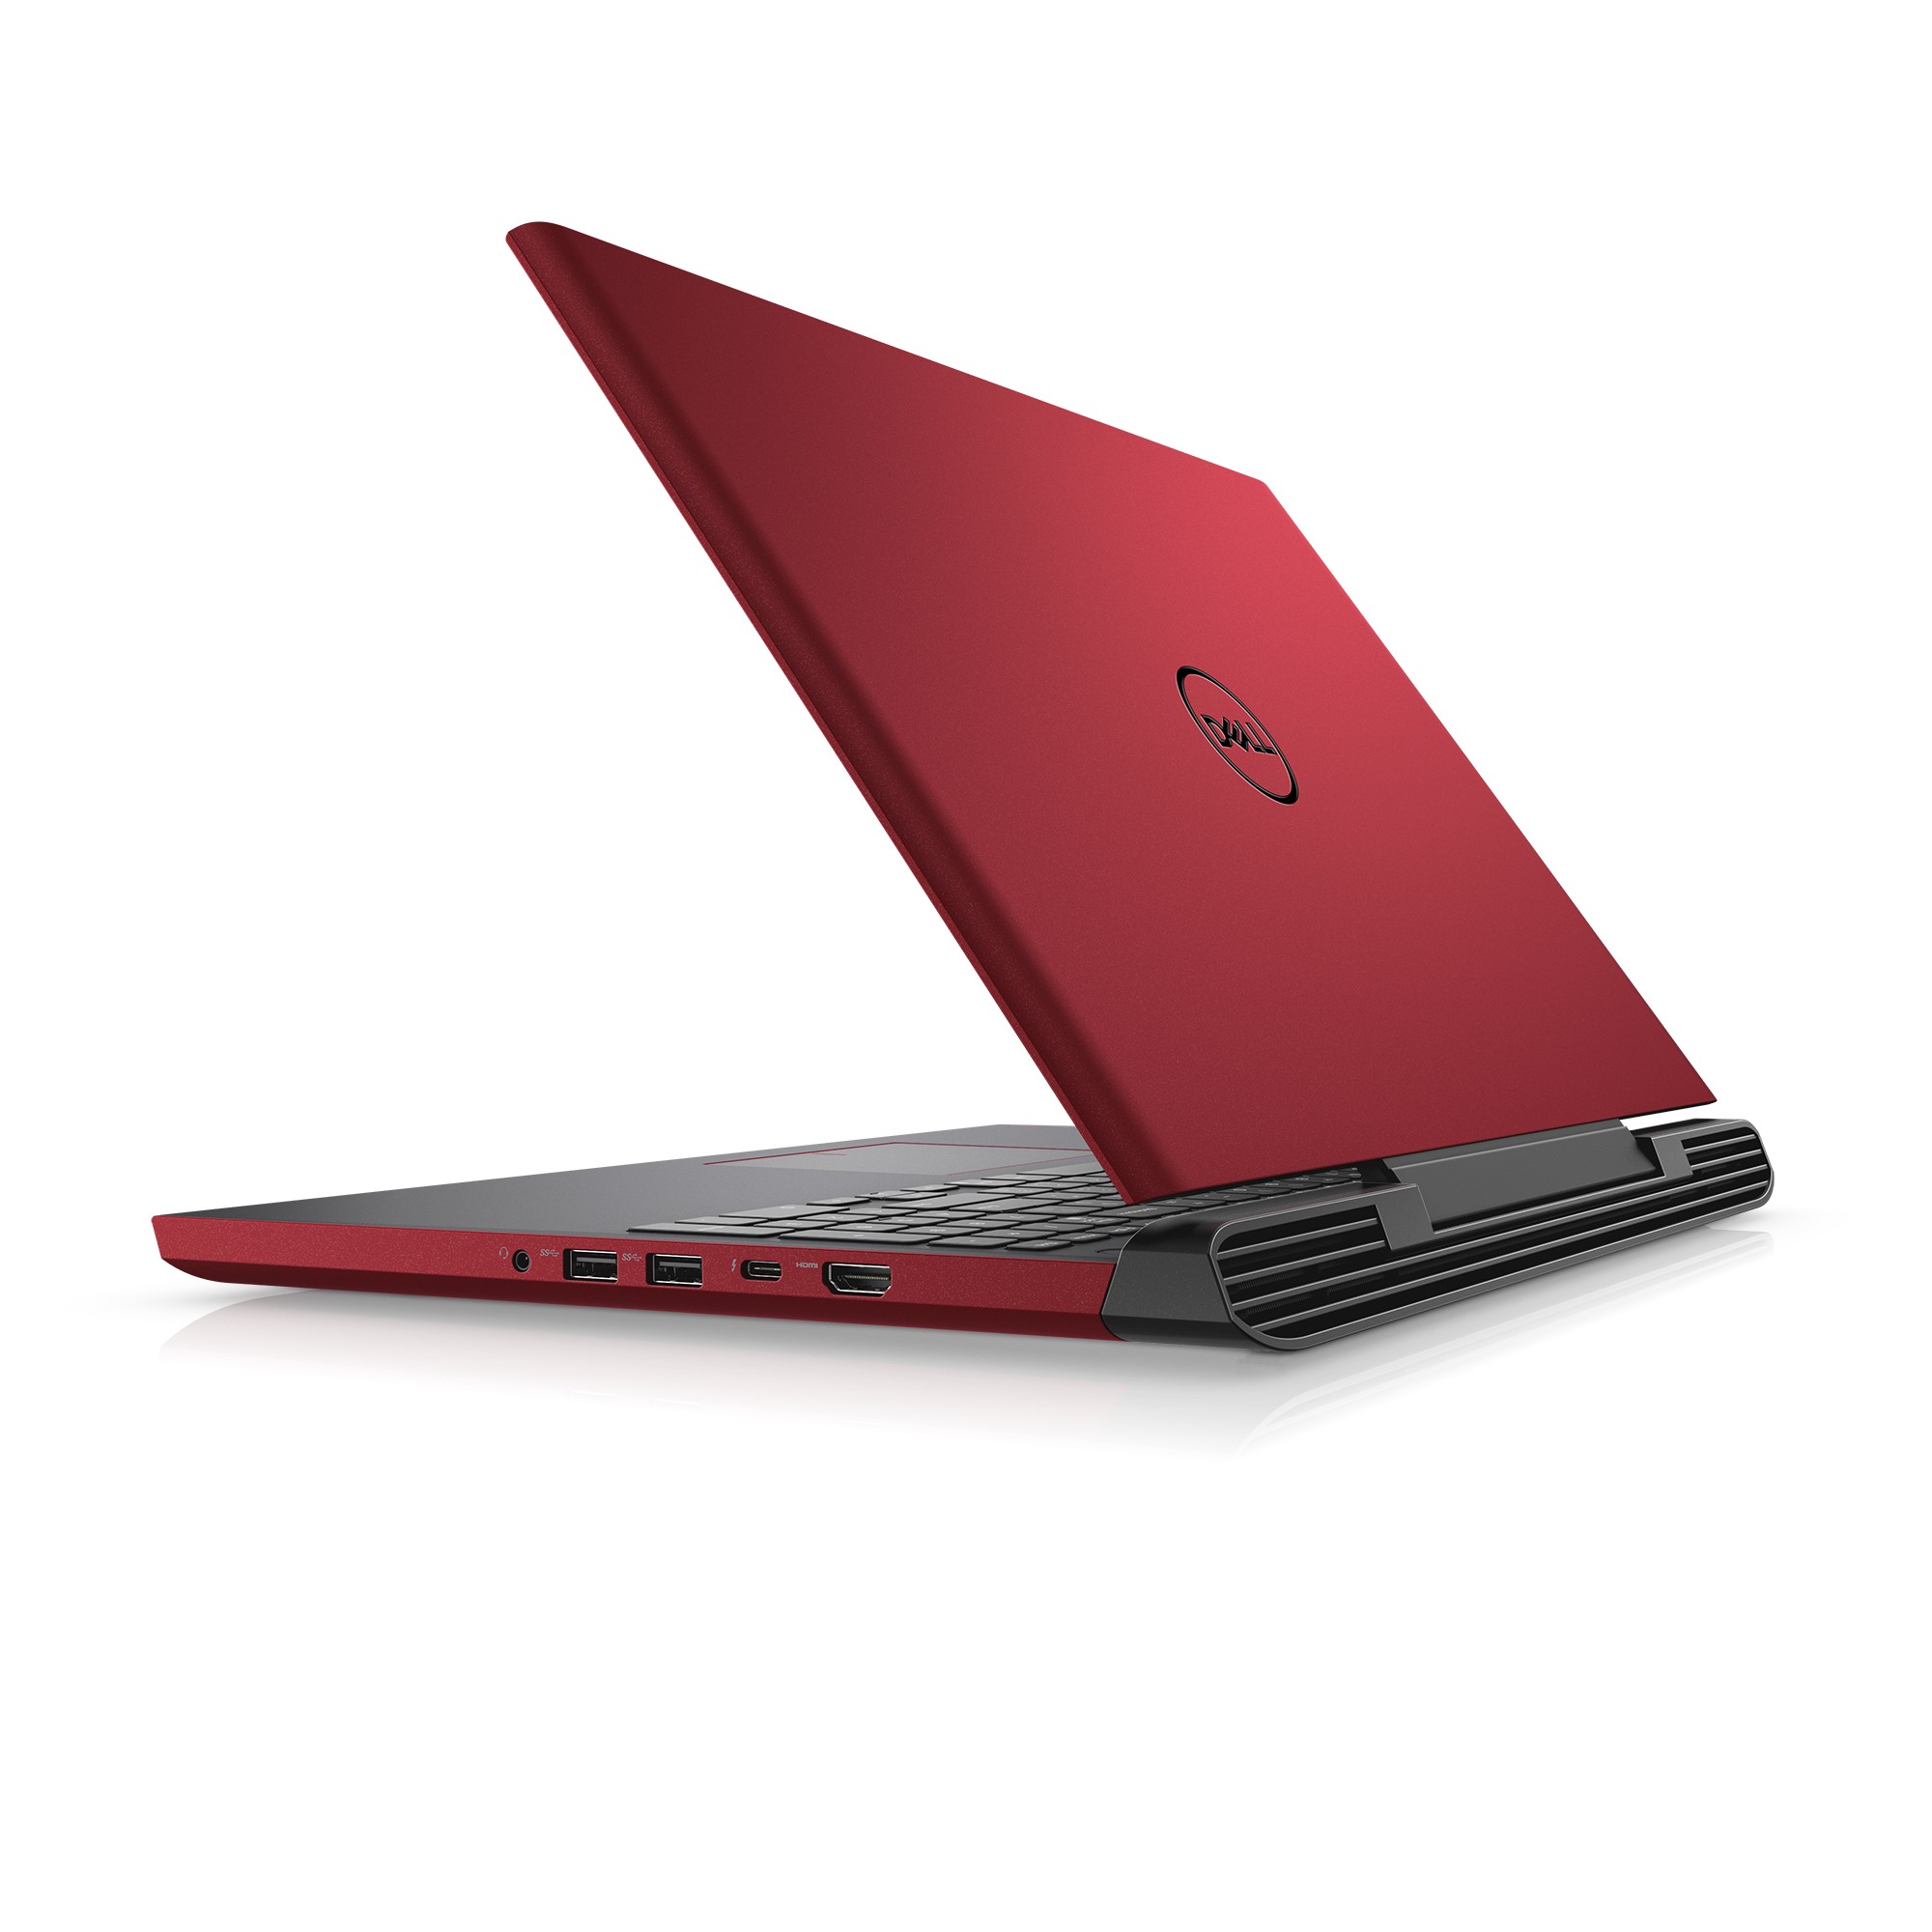 Dell G5 Gaming Laptop 15.6" Full HD, Intel Core i5-8300H, NVIDIA GeForce GTX 1060 6GB, 256GB SSD + 1TB Storage, 16GB RAM, G5587-5559RED - image 1 of 3